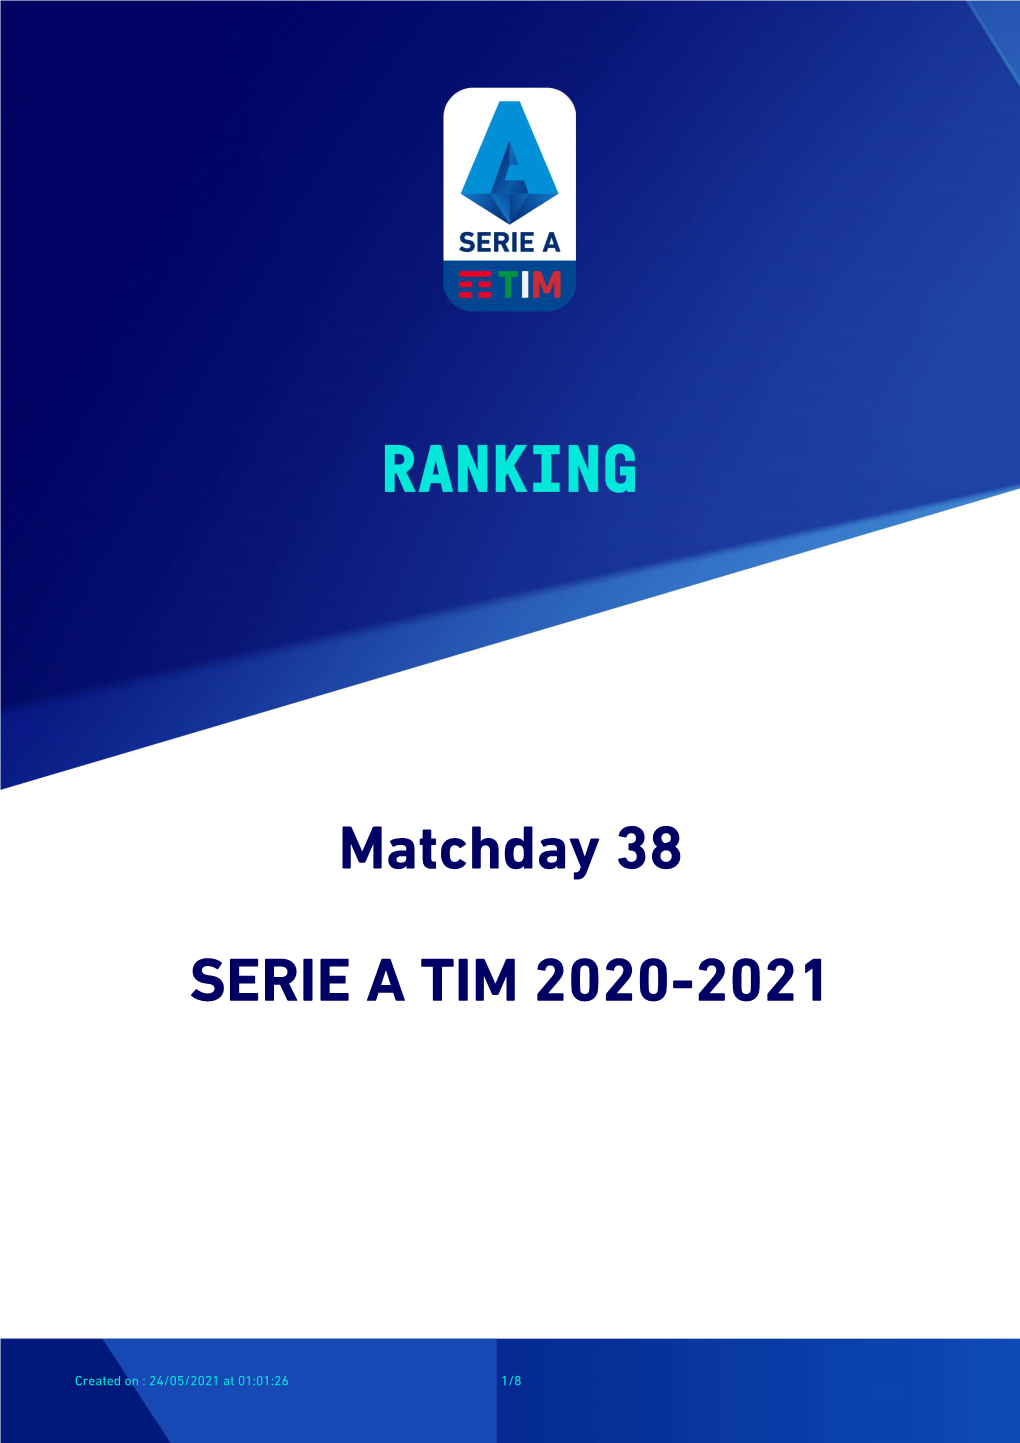 Matchday 38 SERIE a TIM 2020-2021